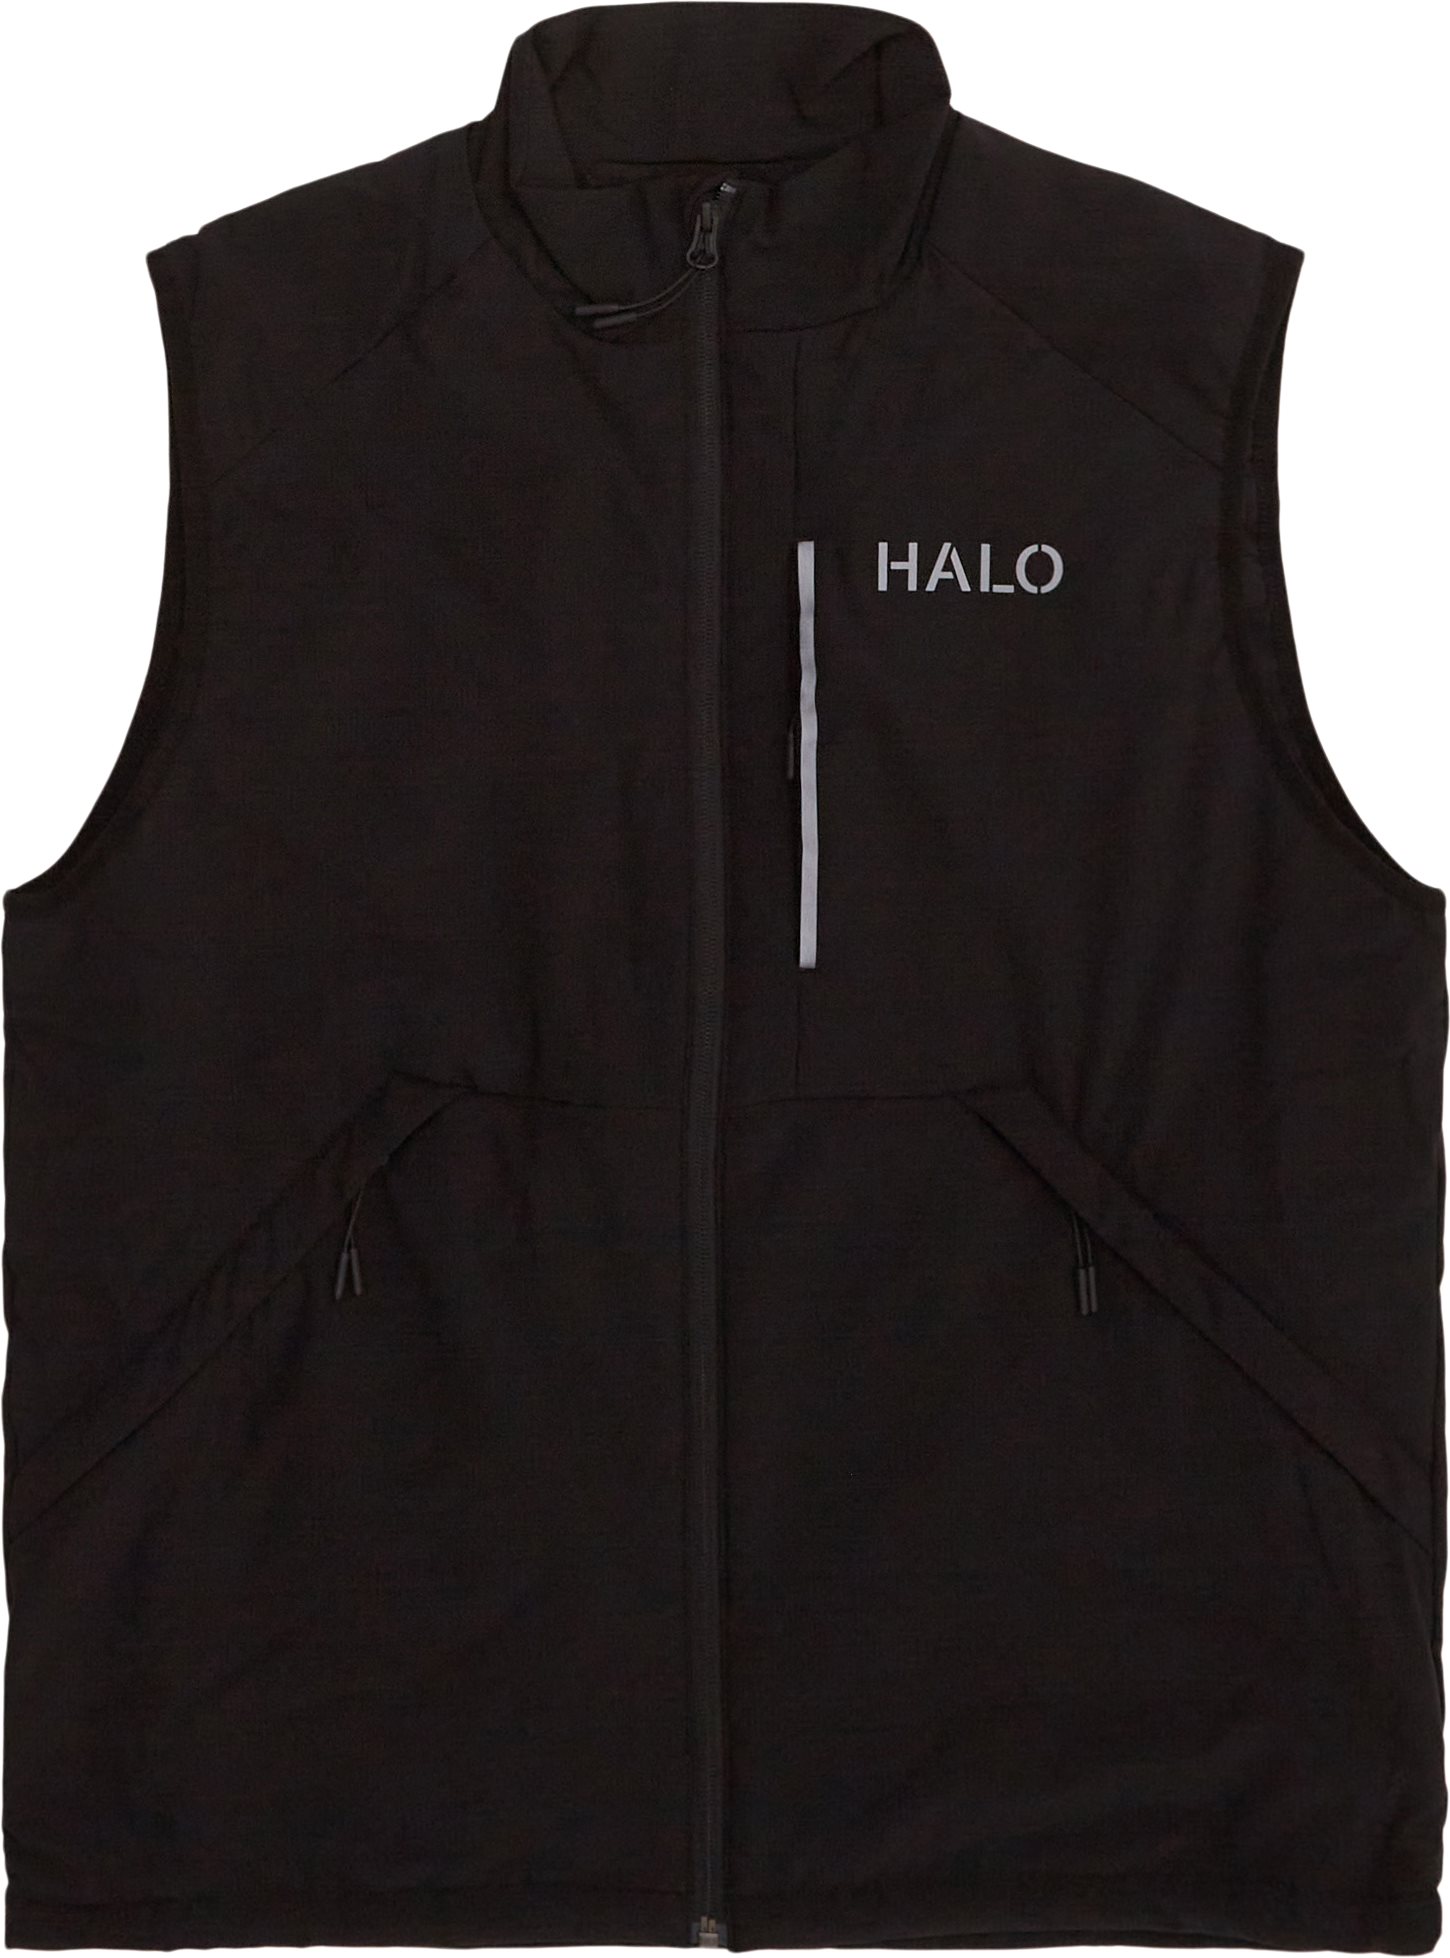 HALO Vests INSULATED TECH VEST 610502 Black